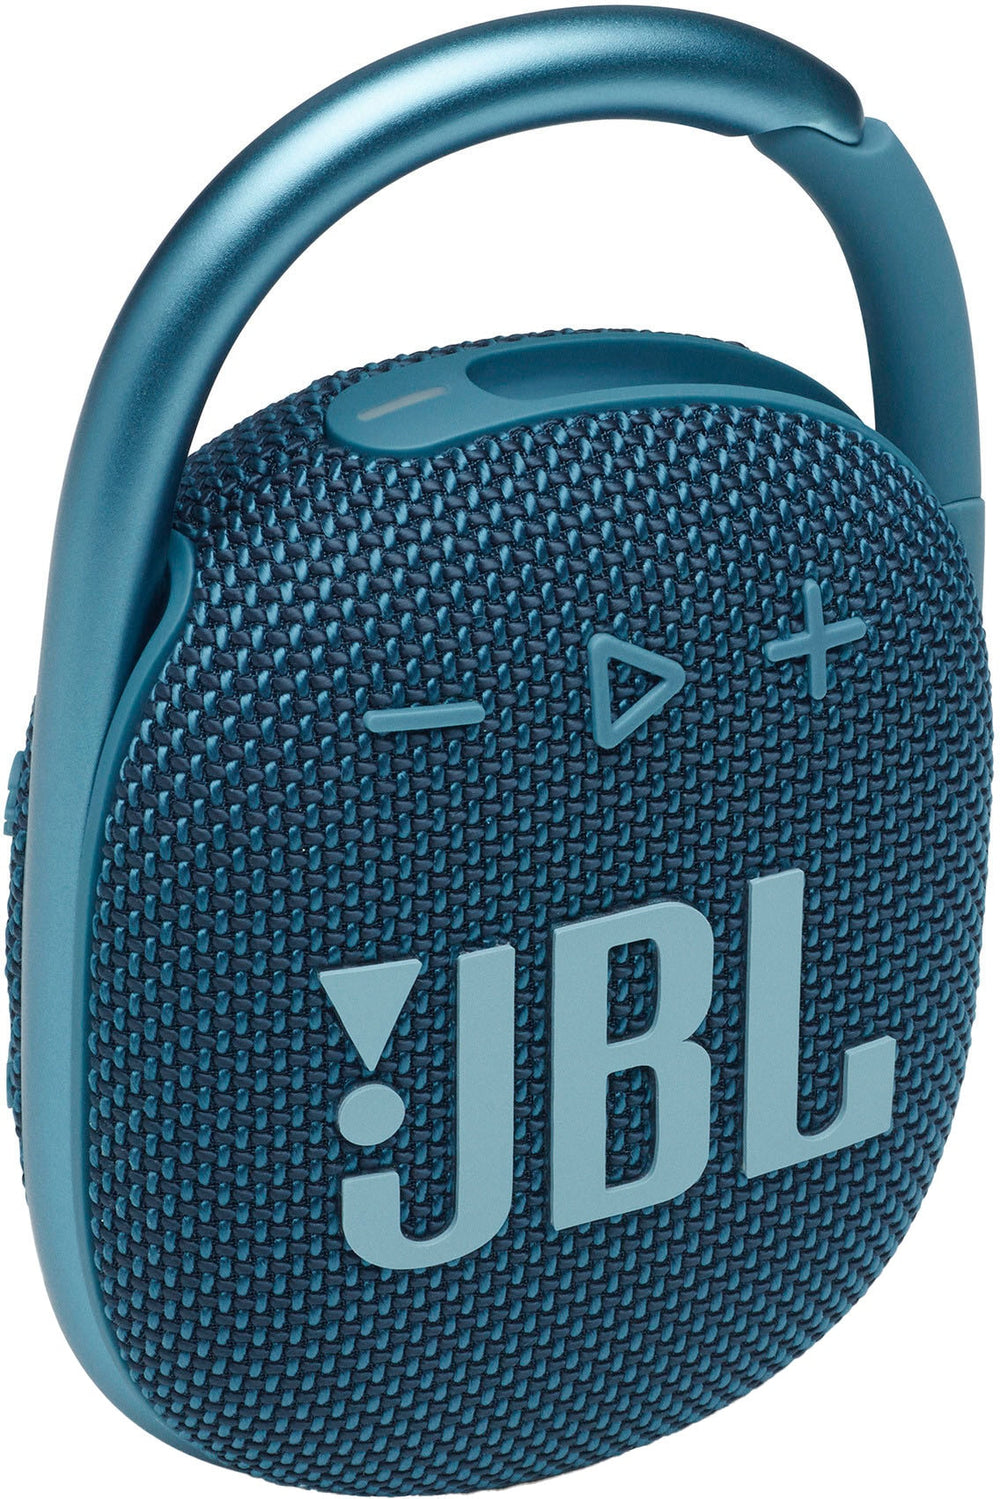 JBL - CLIP4 Portable Bluetooth Speaker - Blue_1